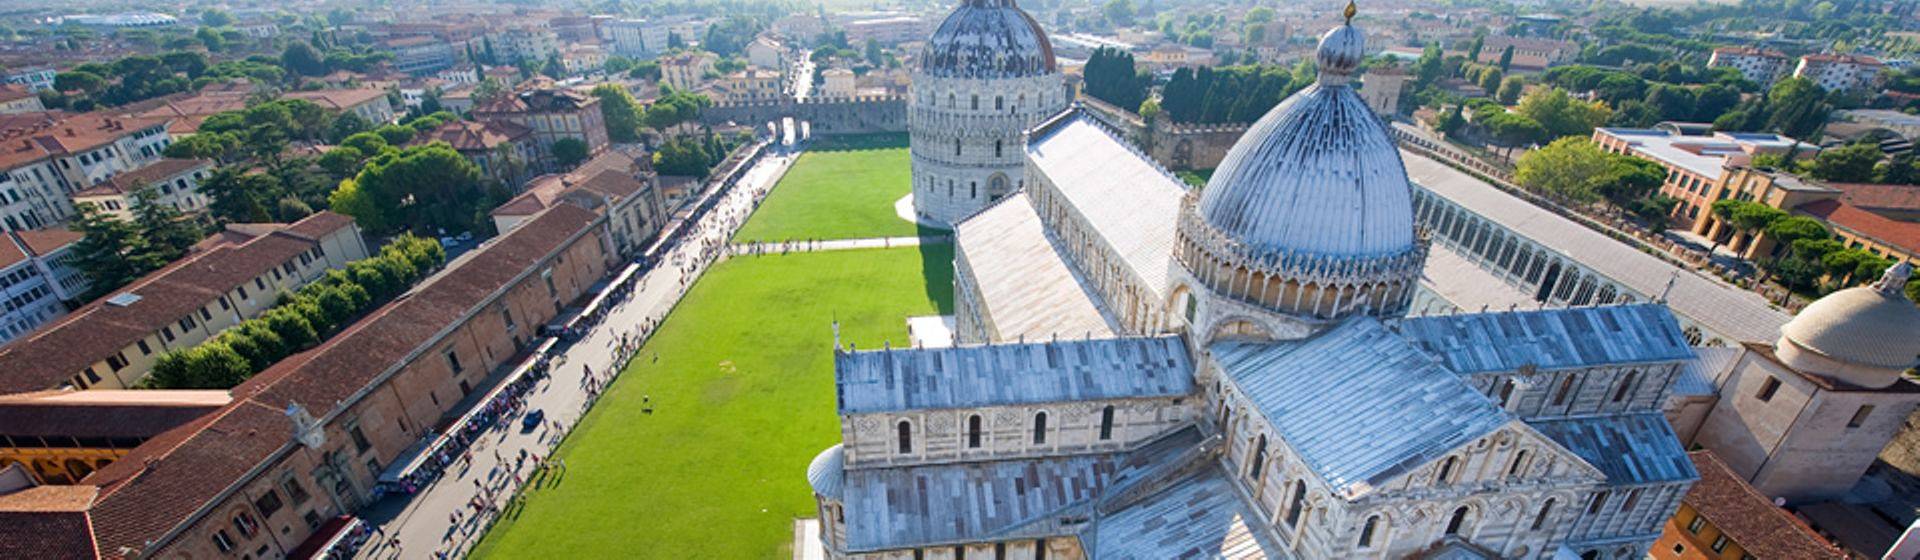 Holidays to Pisa Image